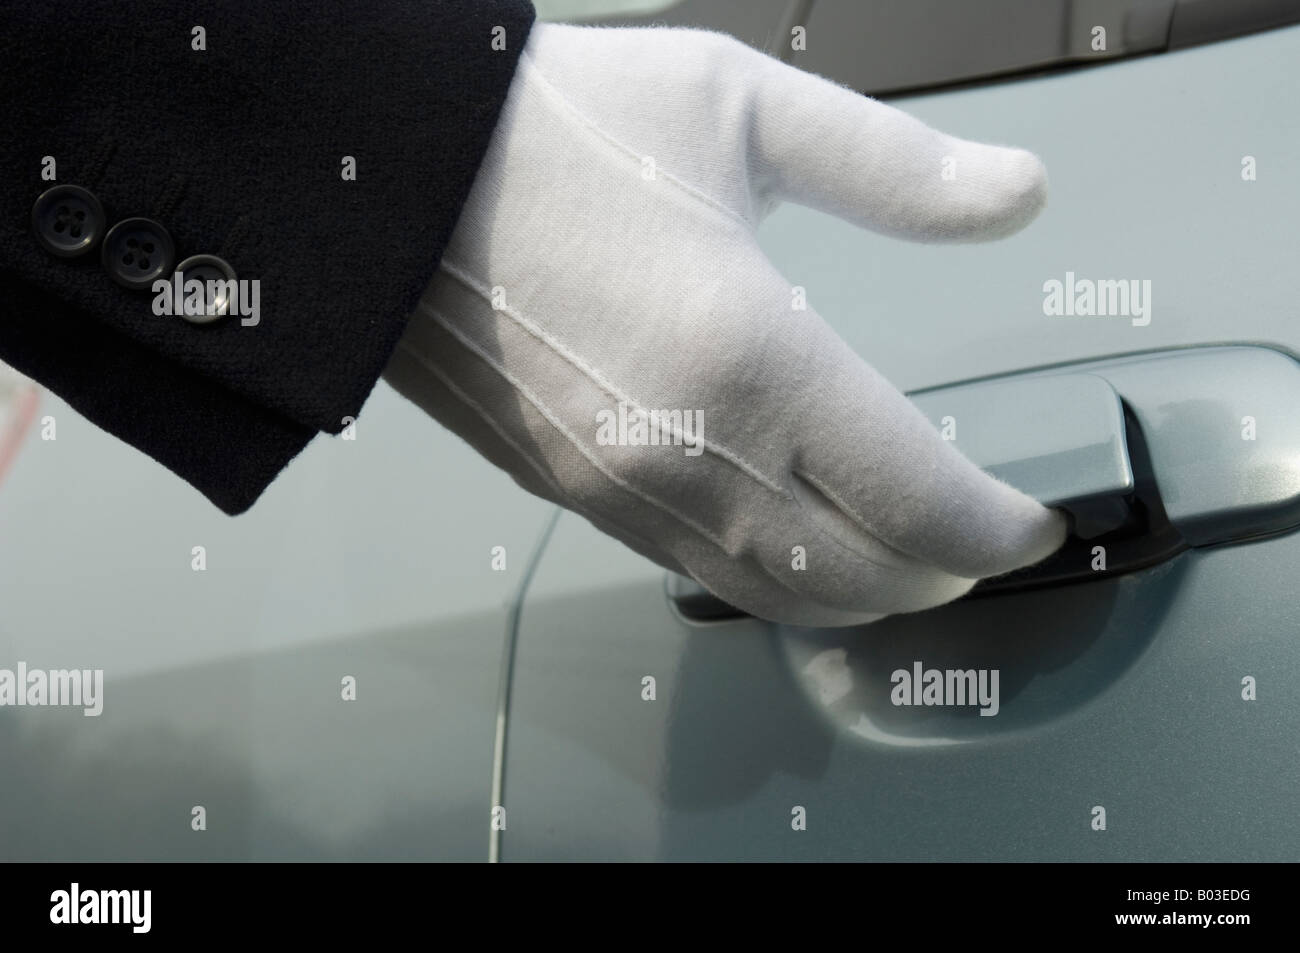 Hand wearing formal white glove opening car door. Five star luxury. Service. Stock Photo